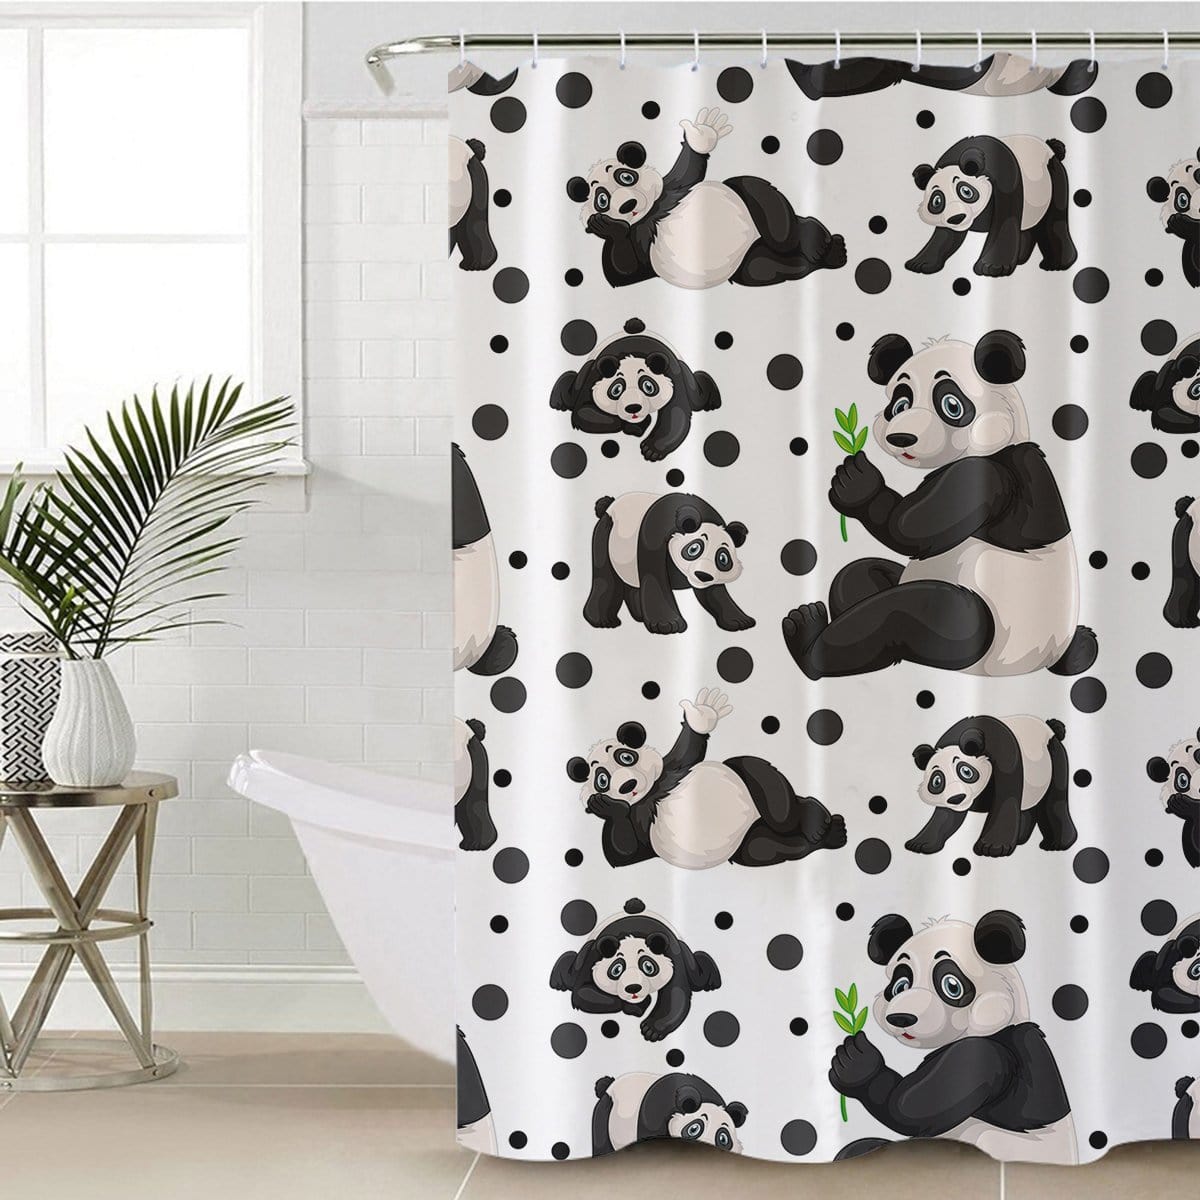 Cheeky Panda Cheeky Panda Shower Curtain